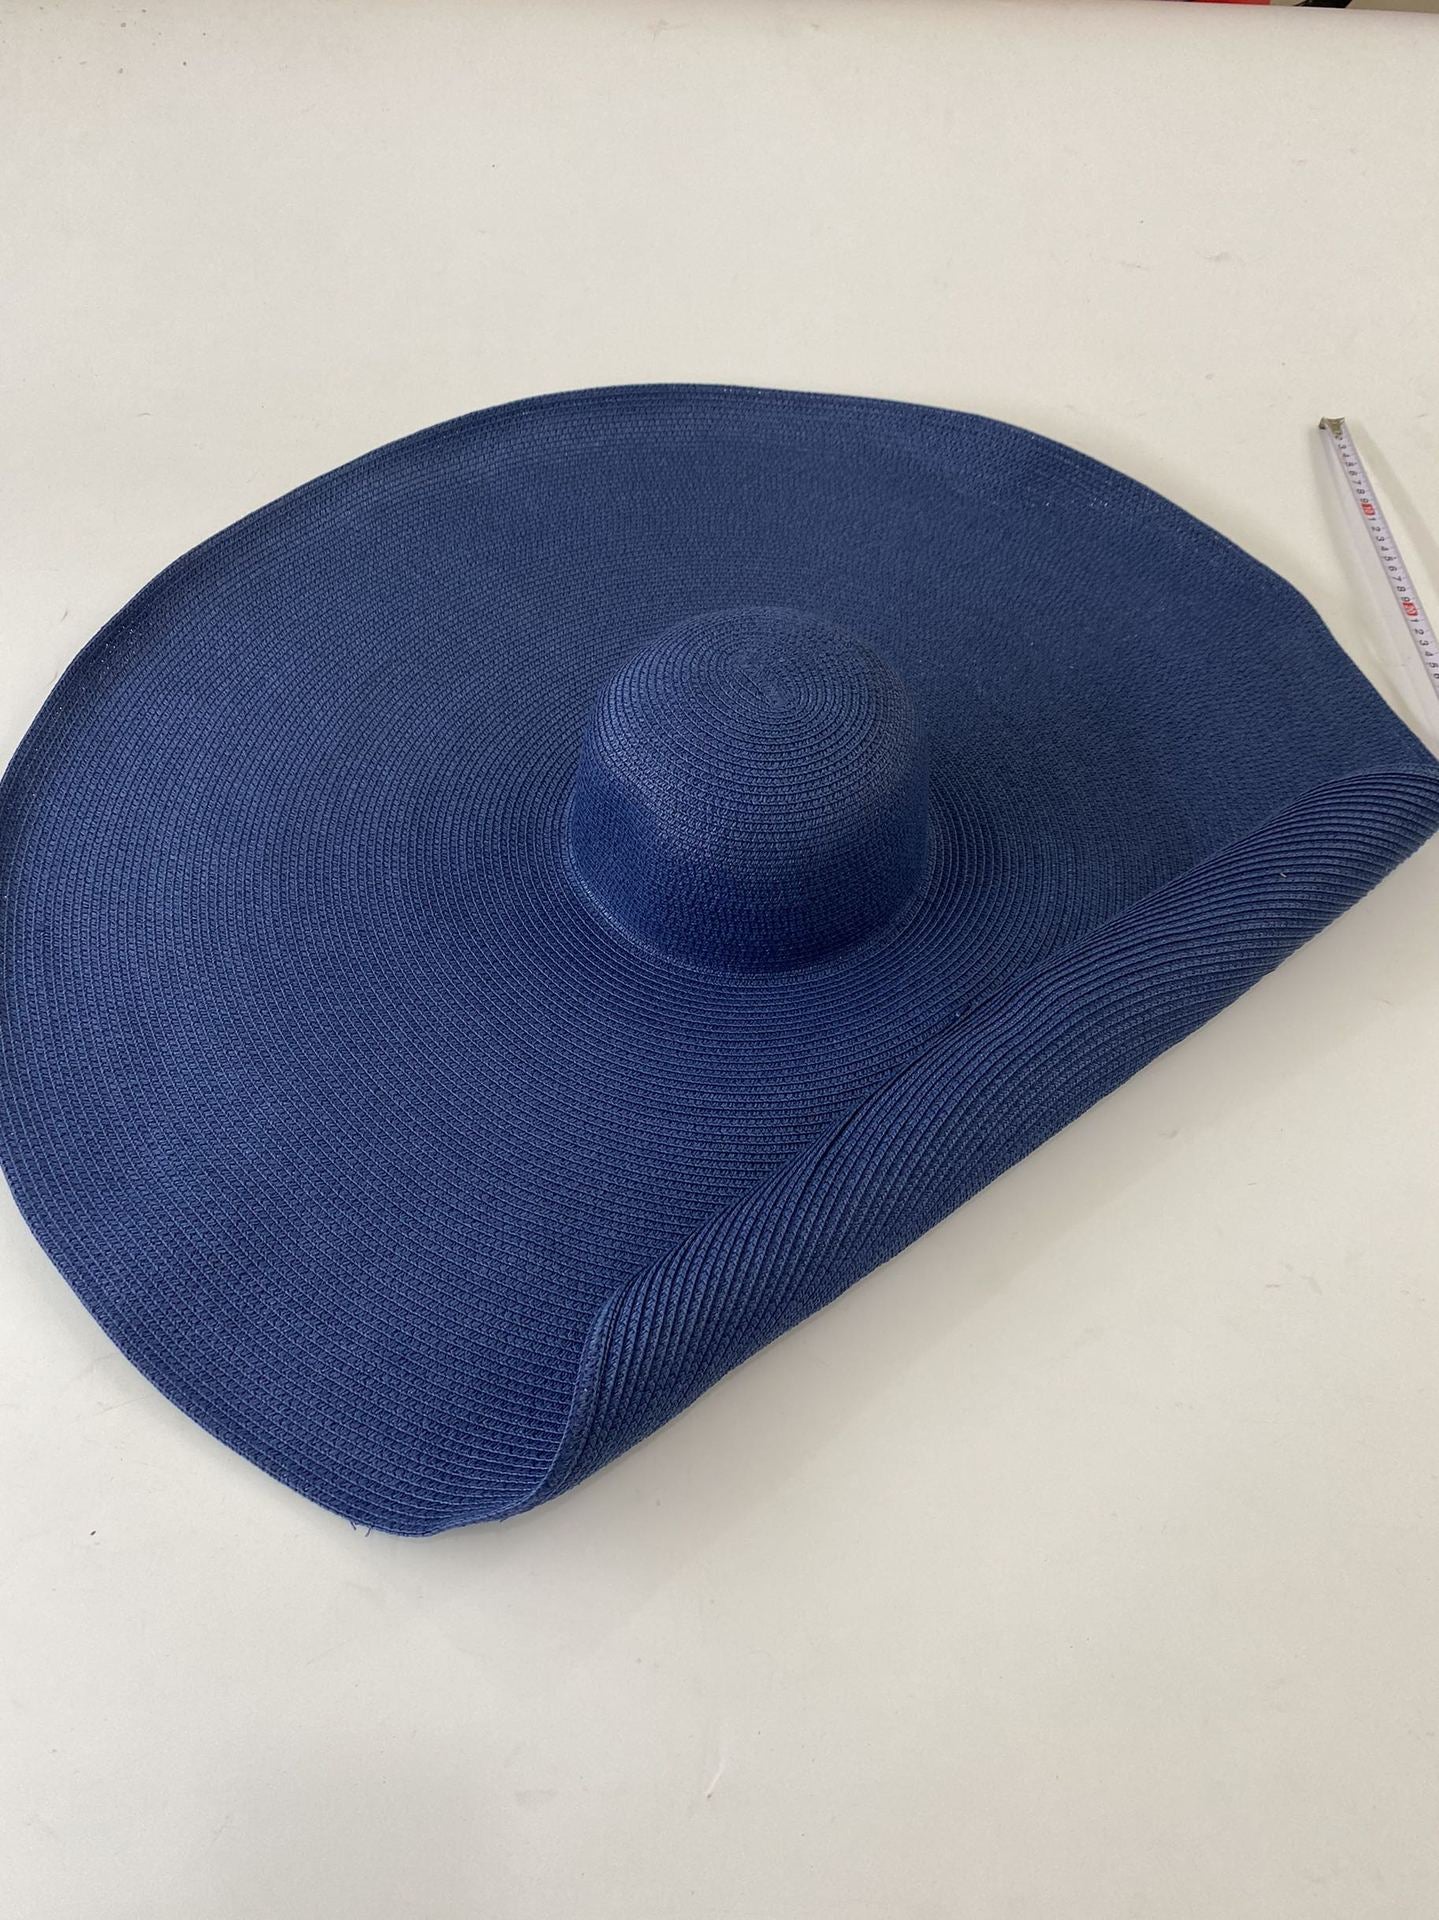 Seaside Sun Hat Travel Hat - Urban Caps